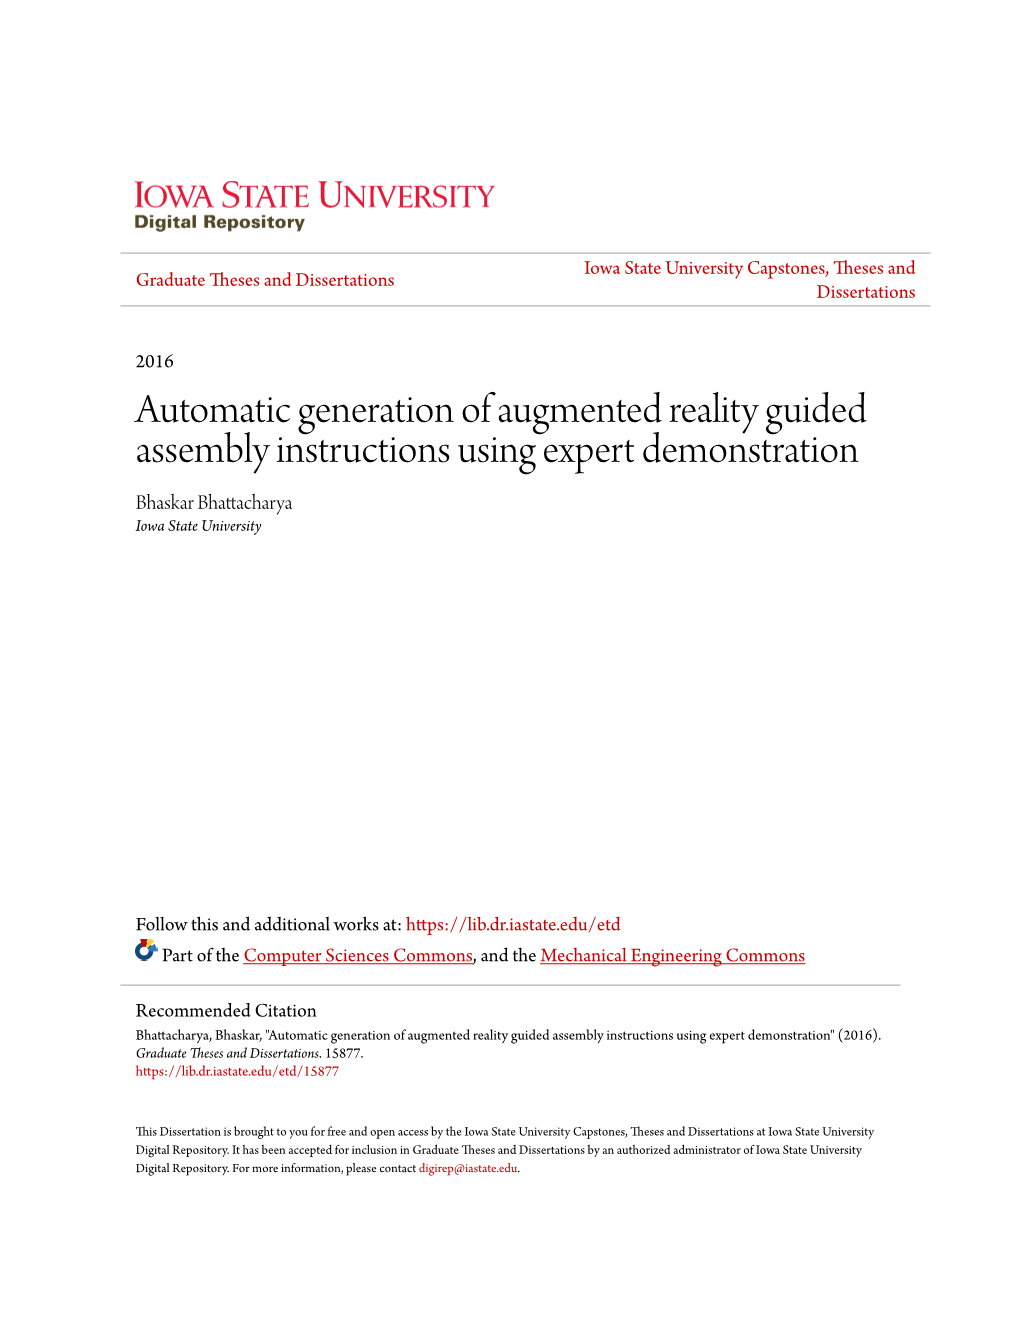 Automatic Generation of Augmented Reality Guided Assembly Instructions Using Expert Demonstration Bhaskar Bhattacharya Iowa State University